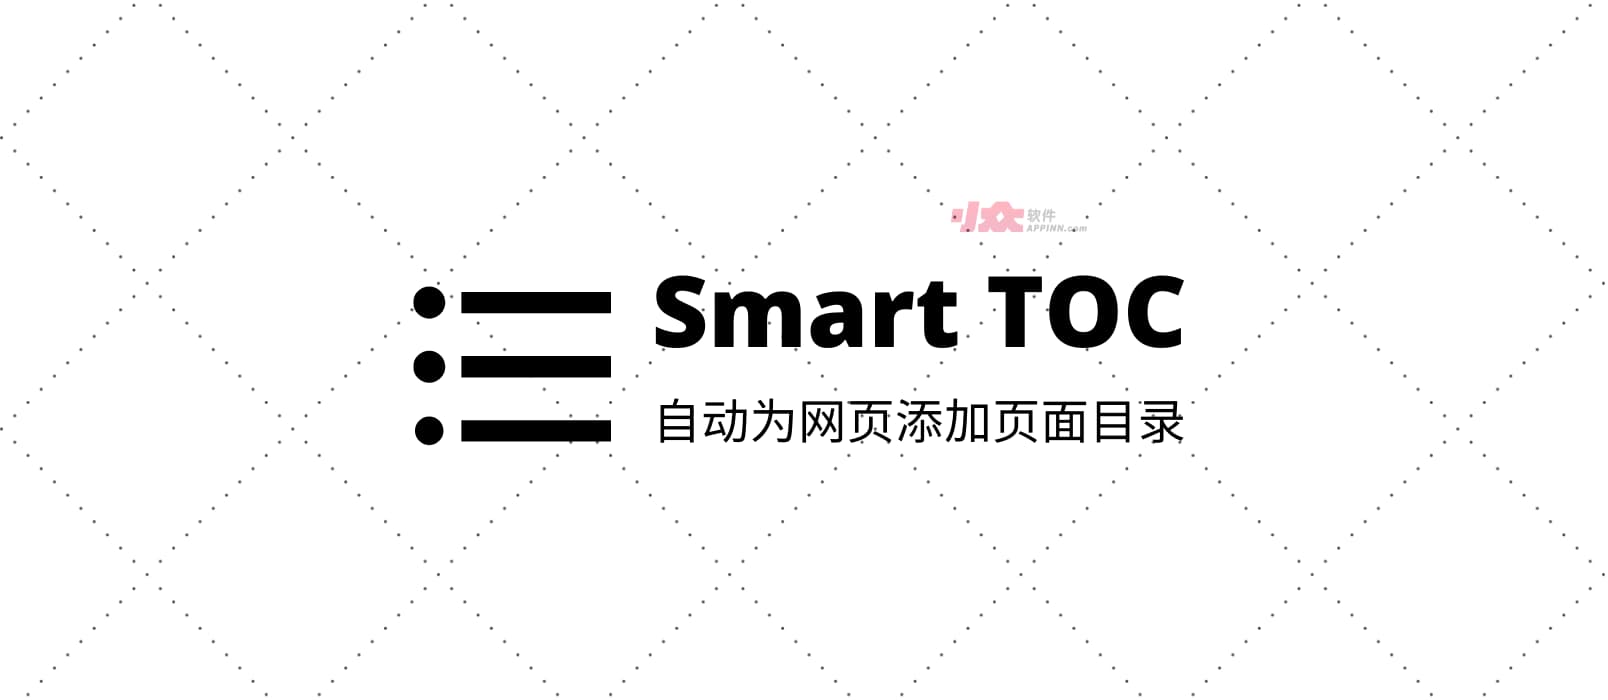 Smart TOC - 生成「智能网页大纲」，自动为 Chrome 添加页面目录